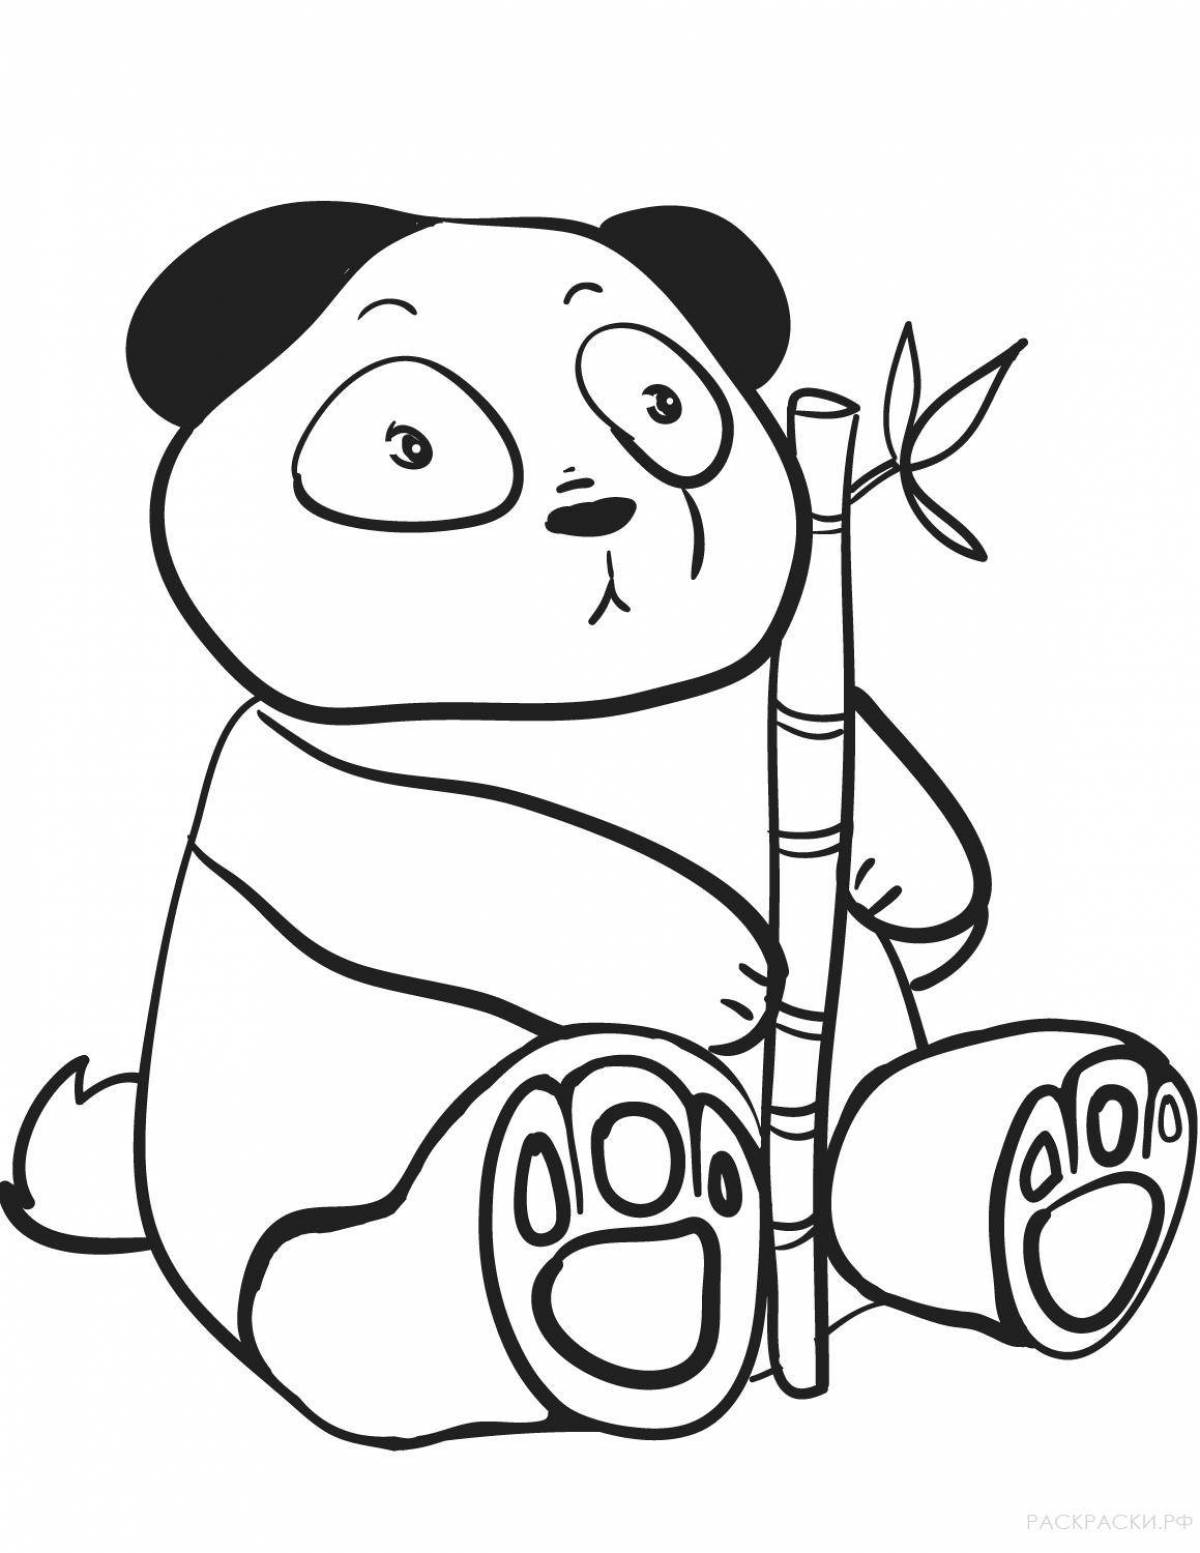 Violent panda coloring pages for kids